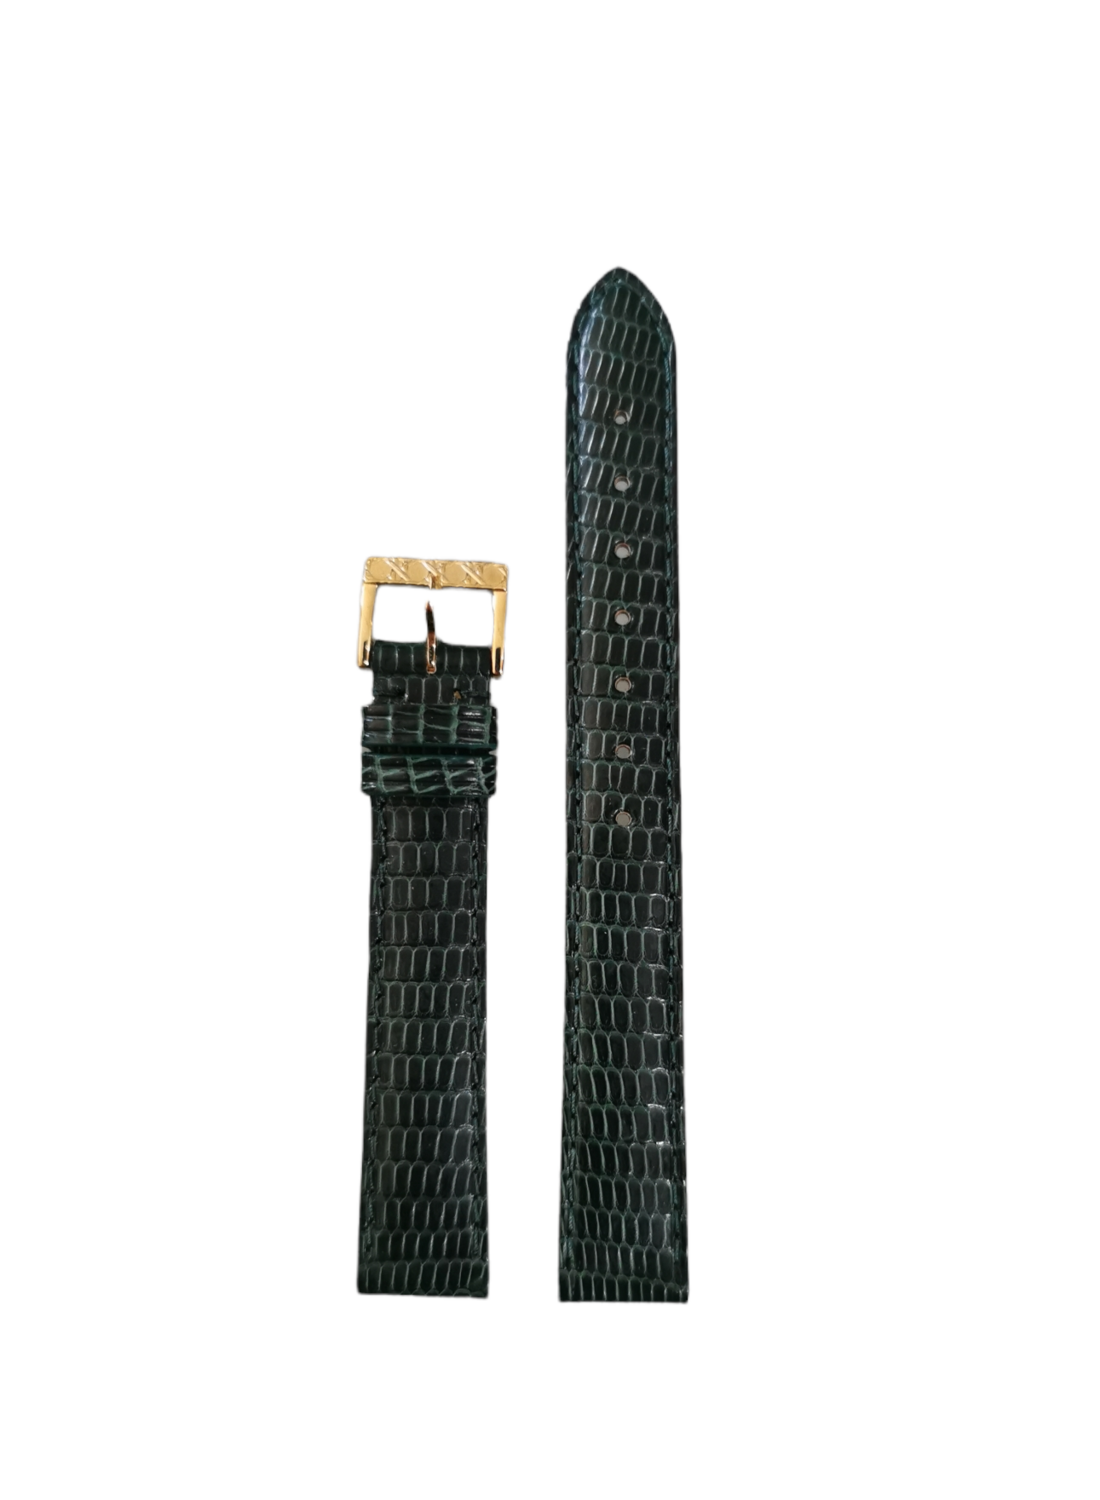 Original Dior Eidechsen Uhrenband, Smaragdgrün, 14 mm Breite